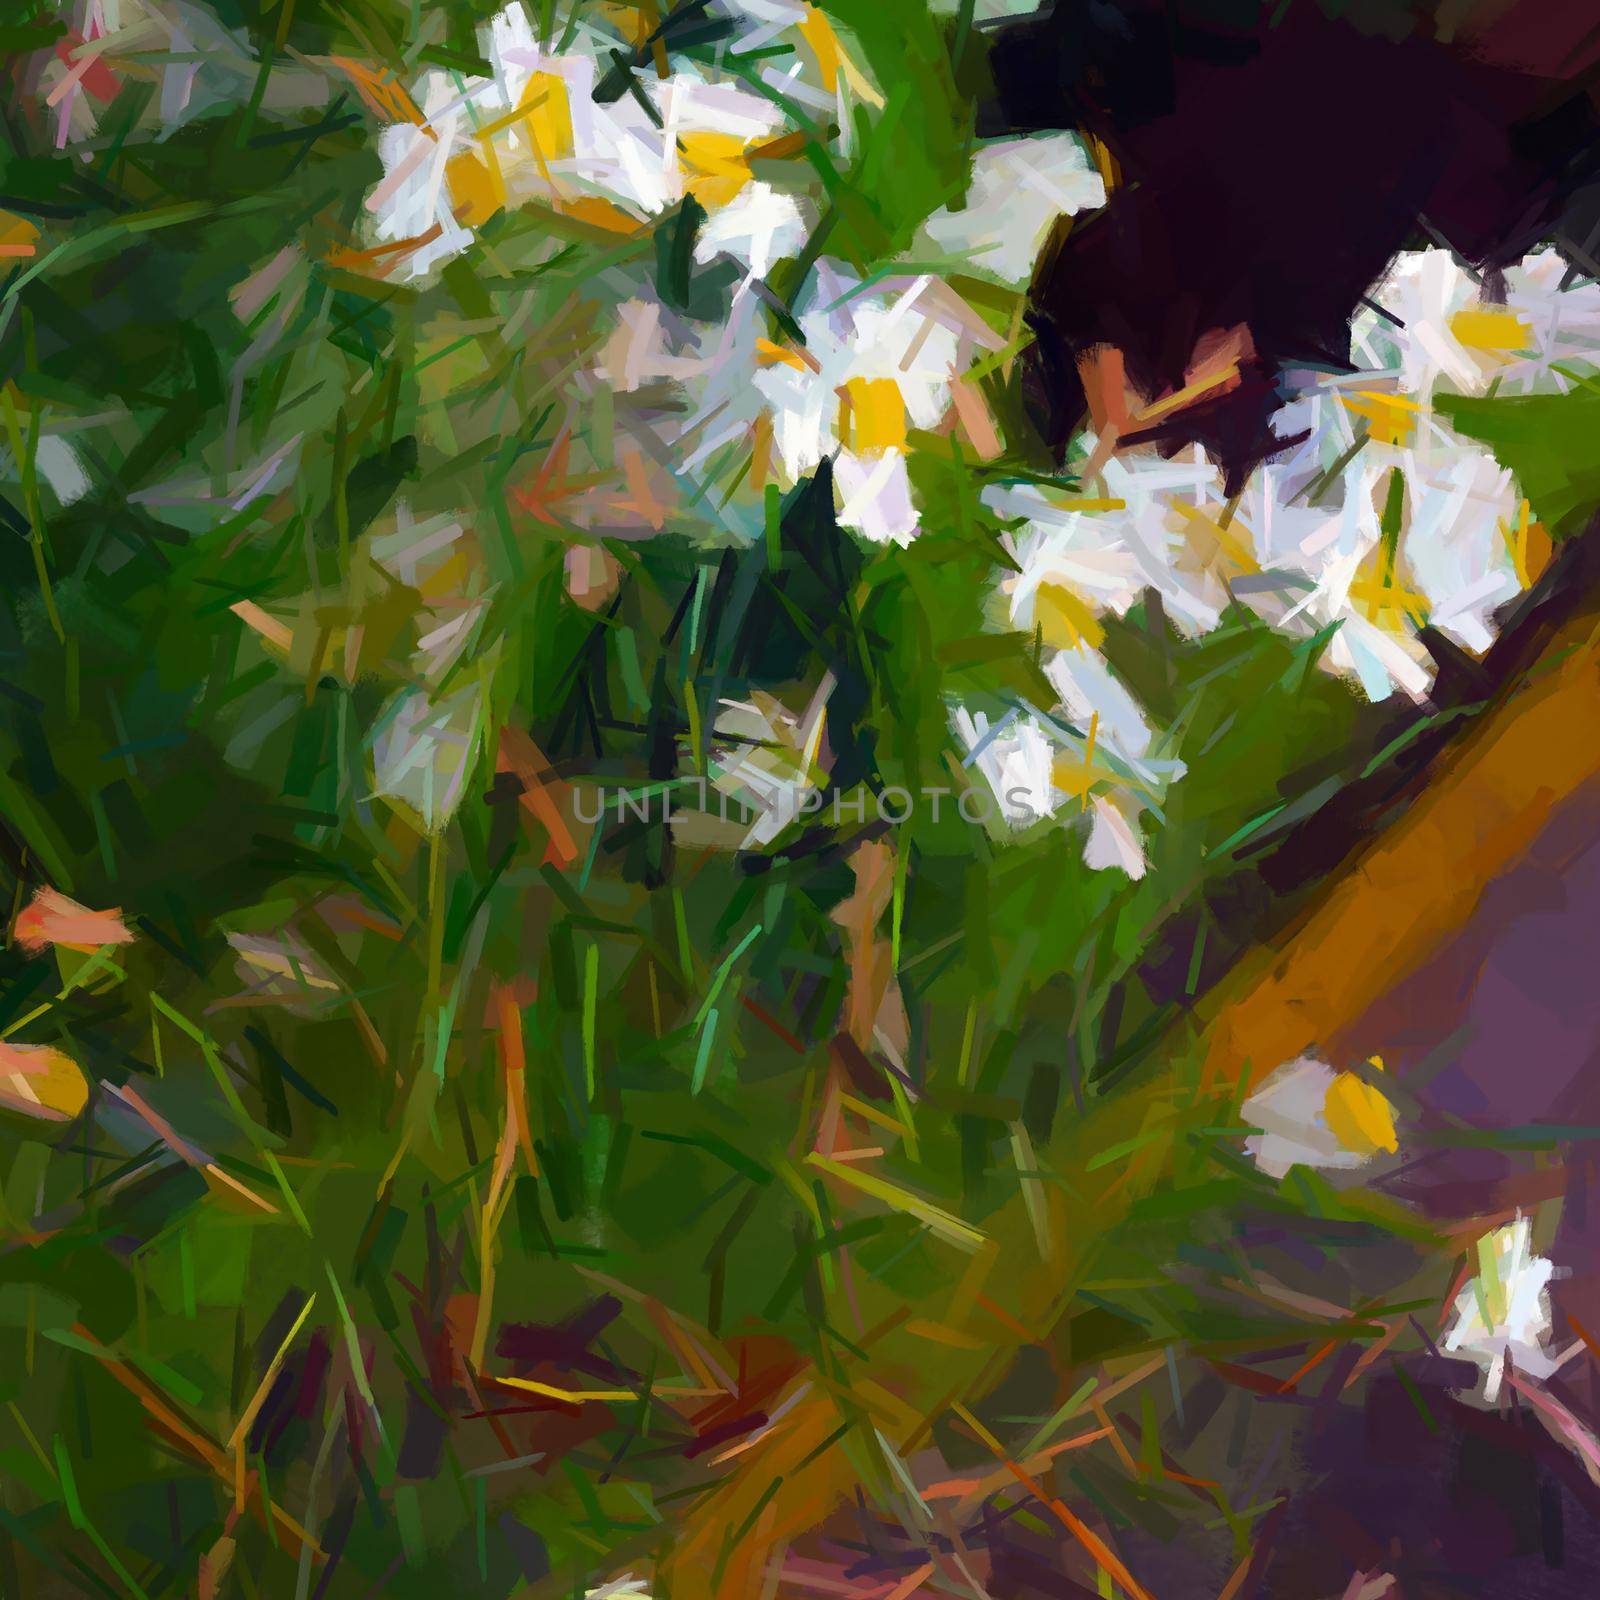 Daisy background by Lirch